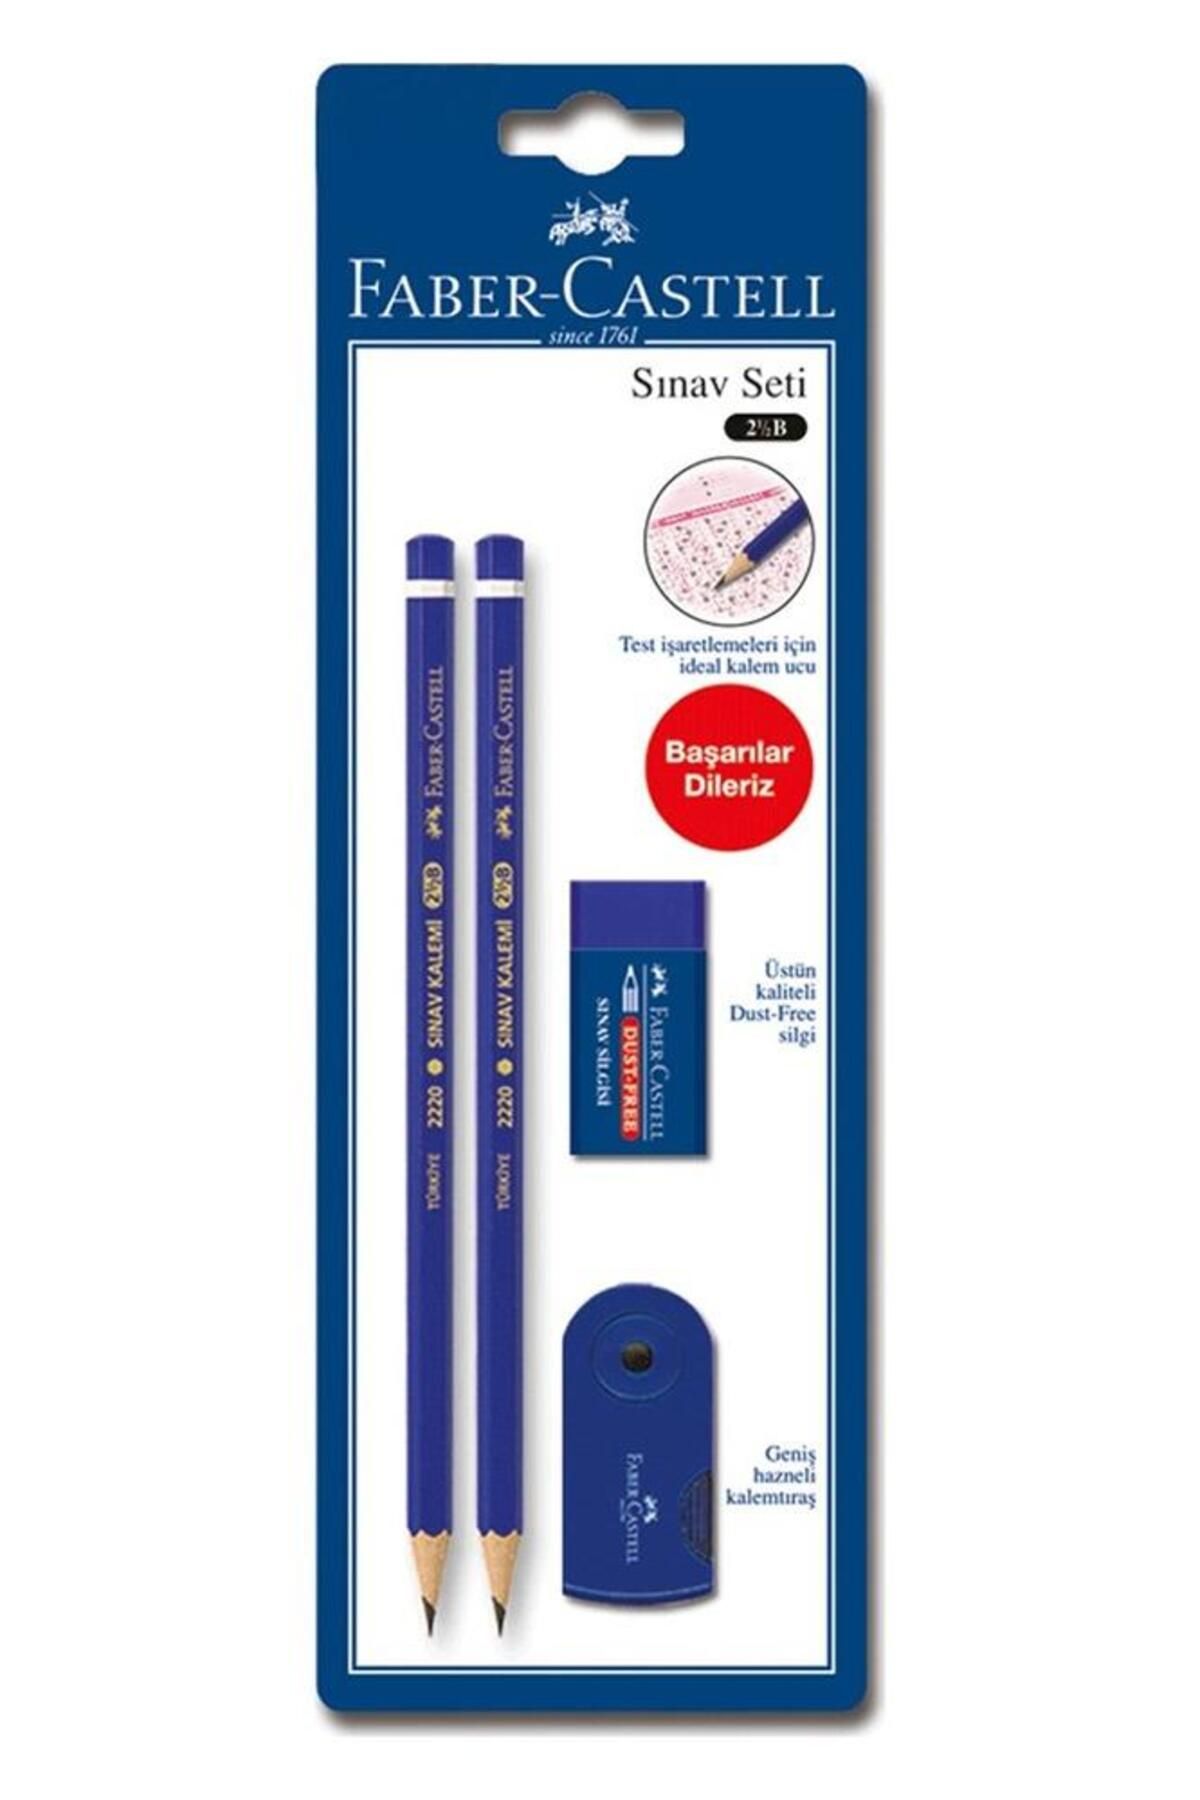 Faber Castell Sınav Kalemi Seti 1 Paket 2 Adet Yumuşak Uçlu Kurşun Kalem 2,5 B 1 Adet Kalemtraş ve 1 Adet Sınav Si